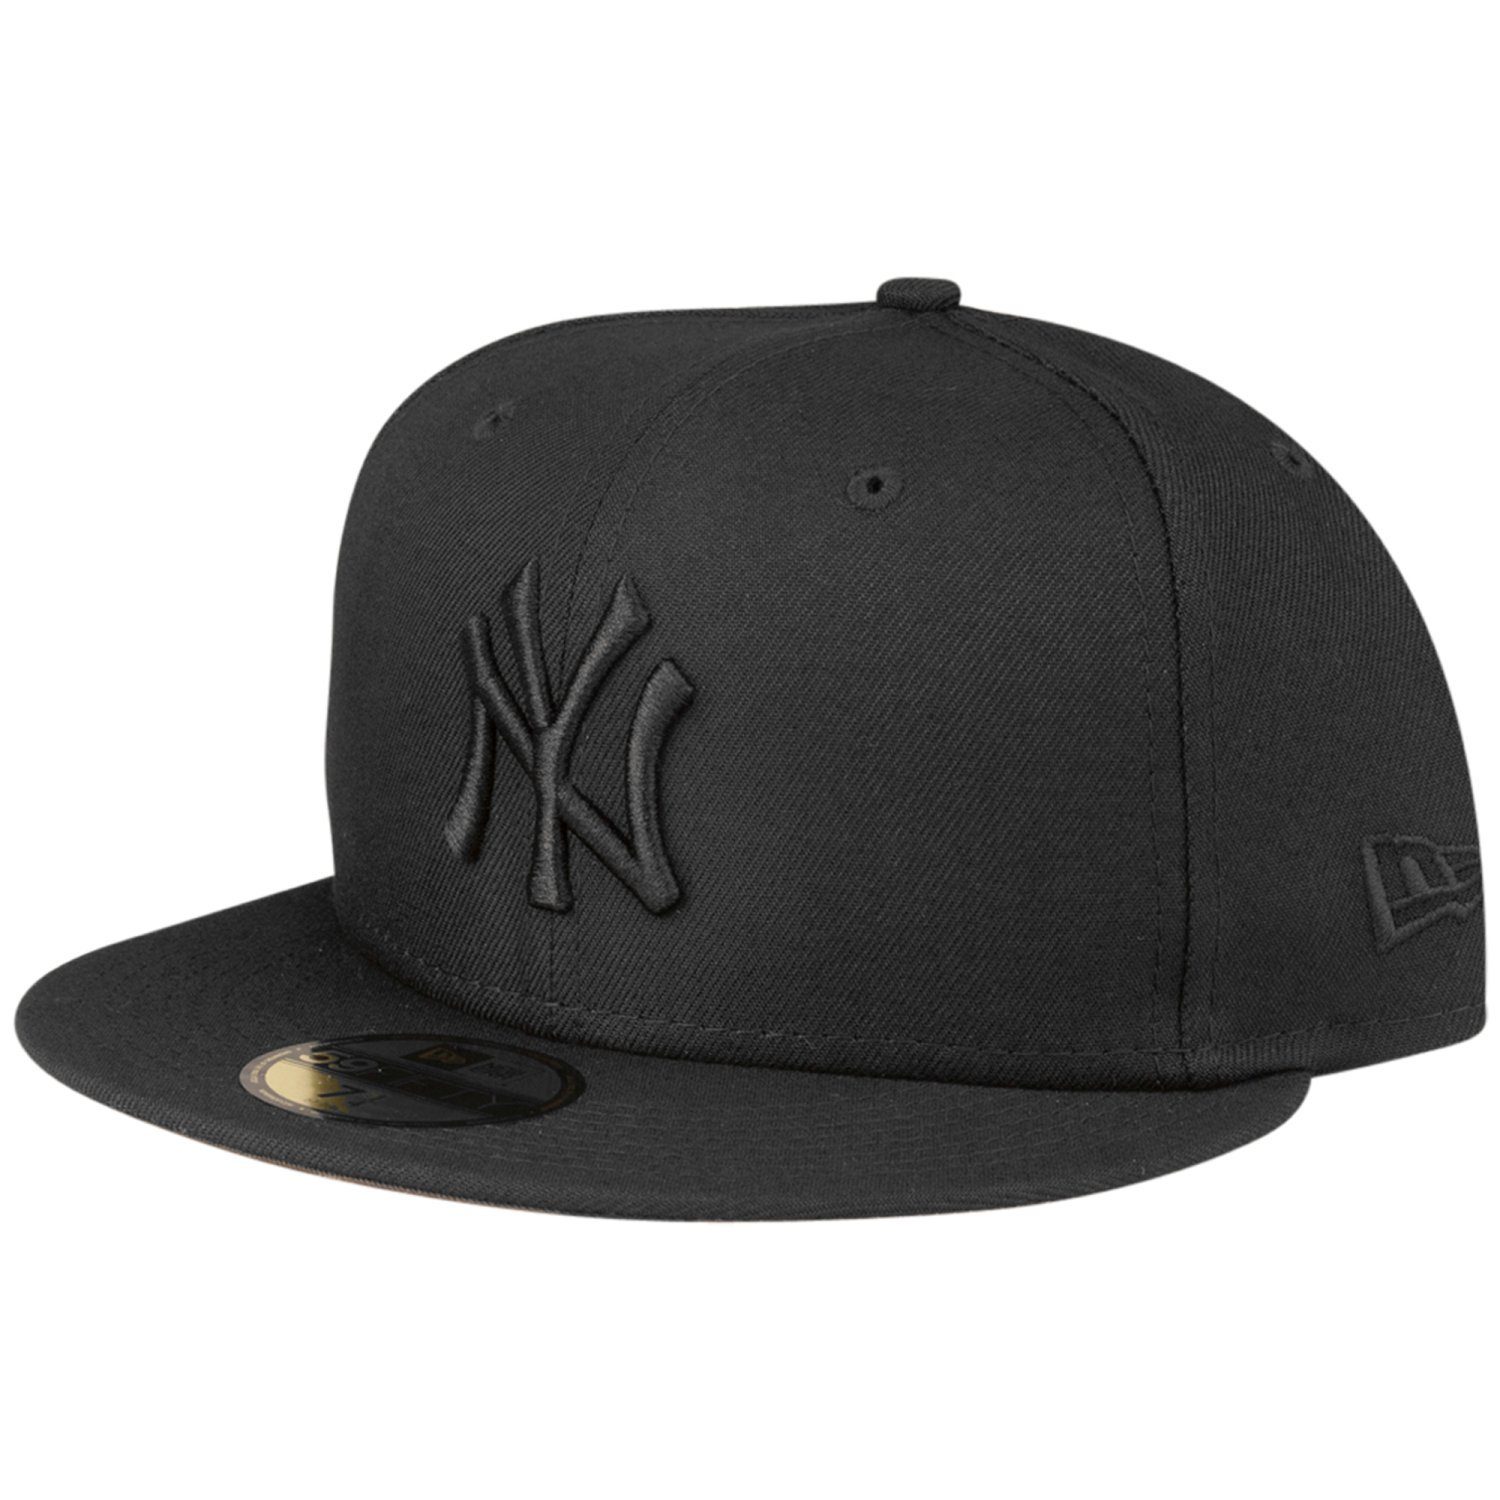 New NY UNDERVISOR Yankees Era 59Fifty Fitted Cap